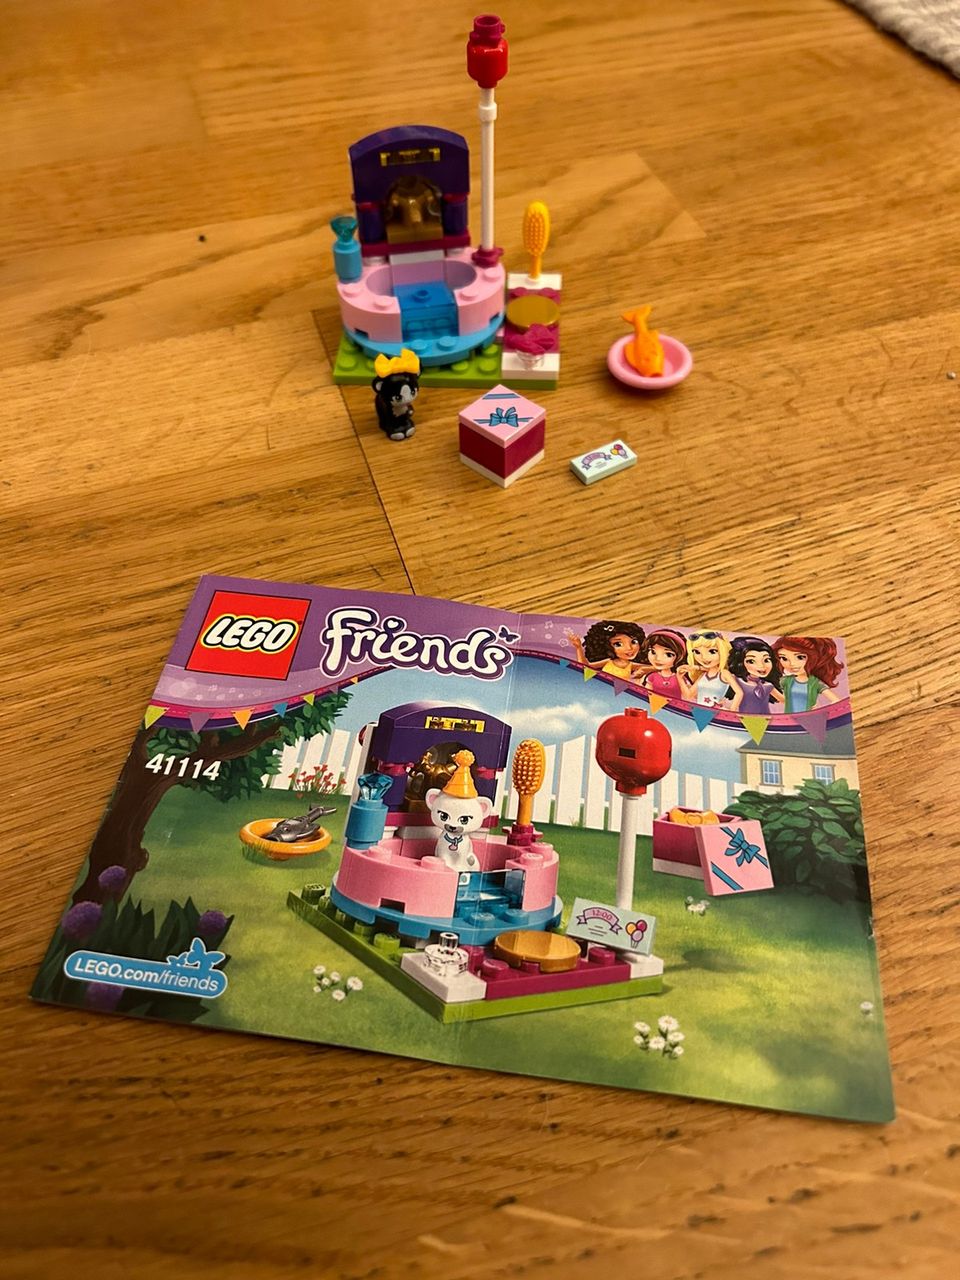 Lego Friends juhlastailaus 4114.